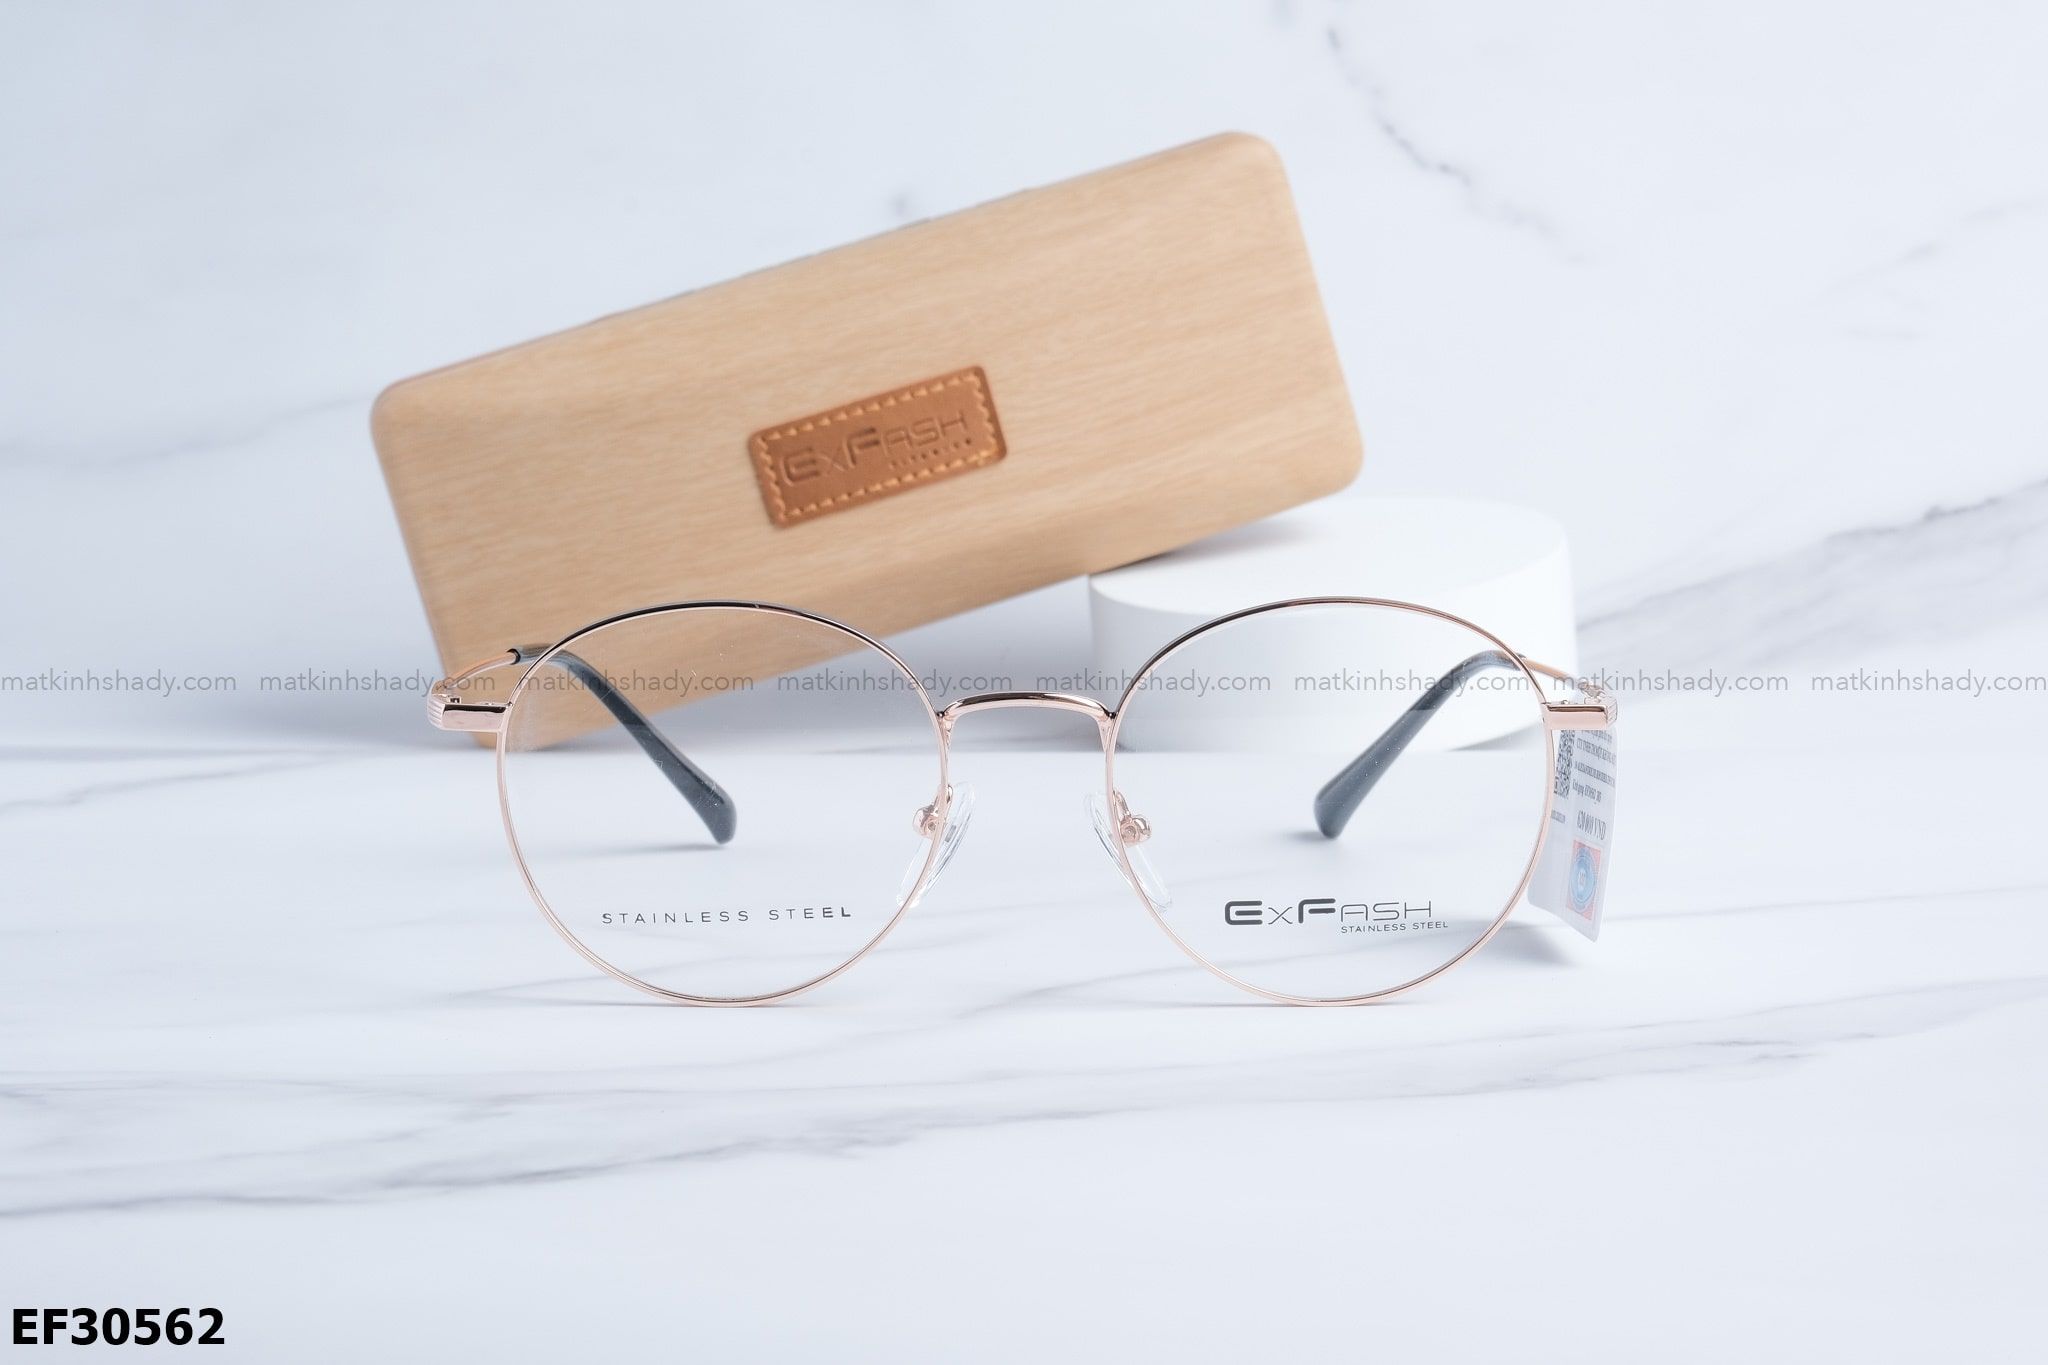  Exfash Eyewear - Glasses - EF30562 